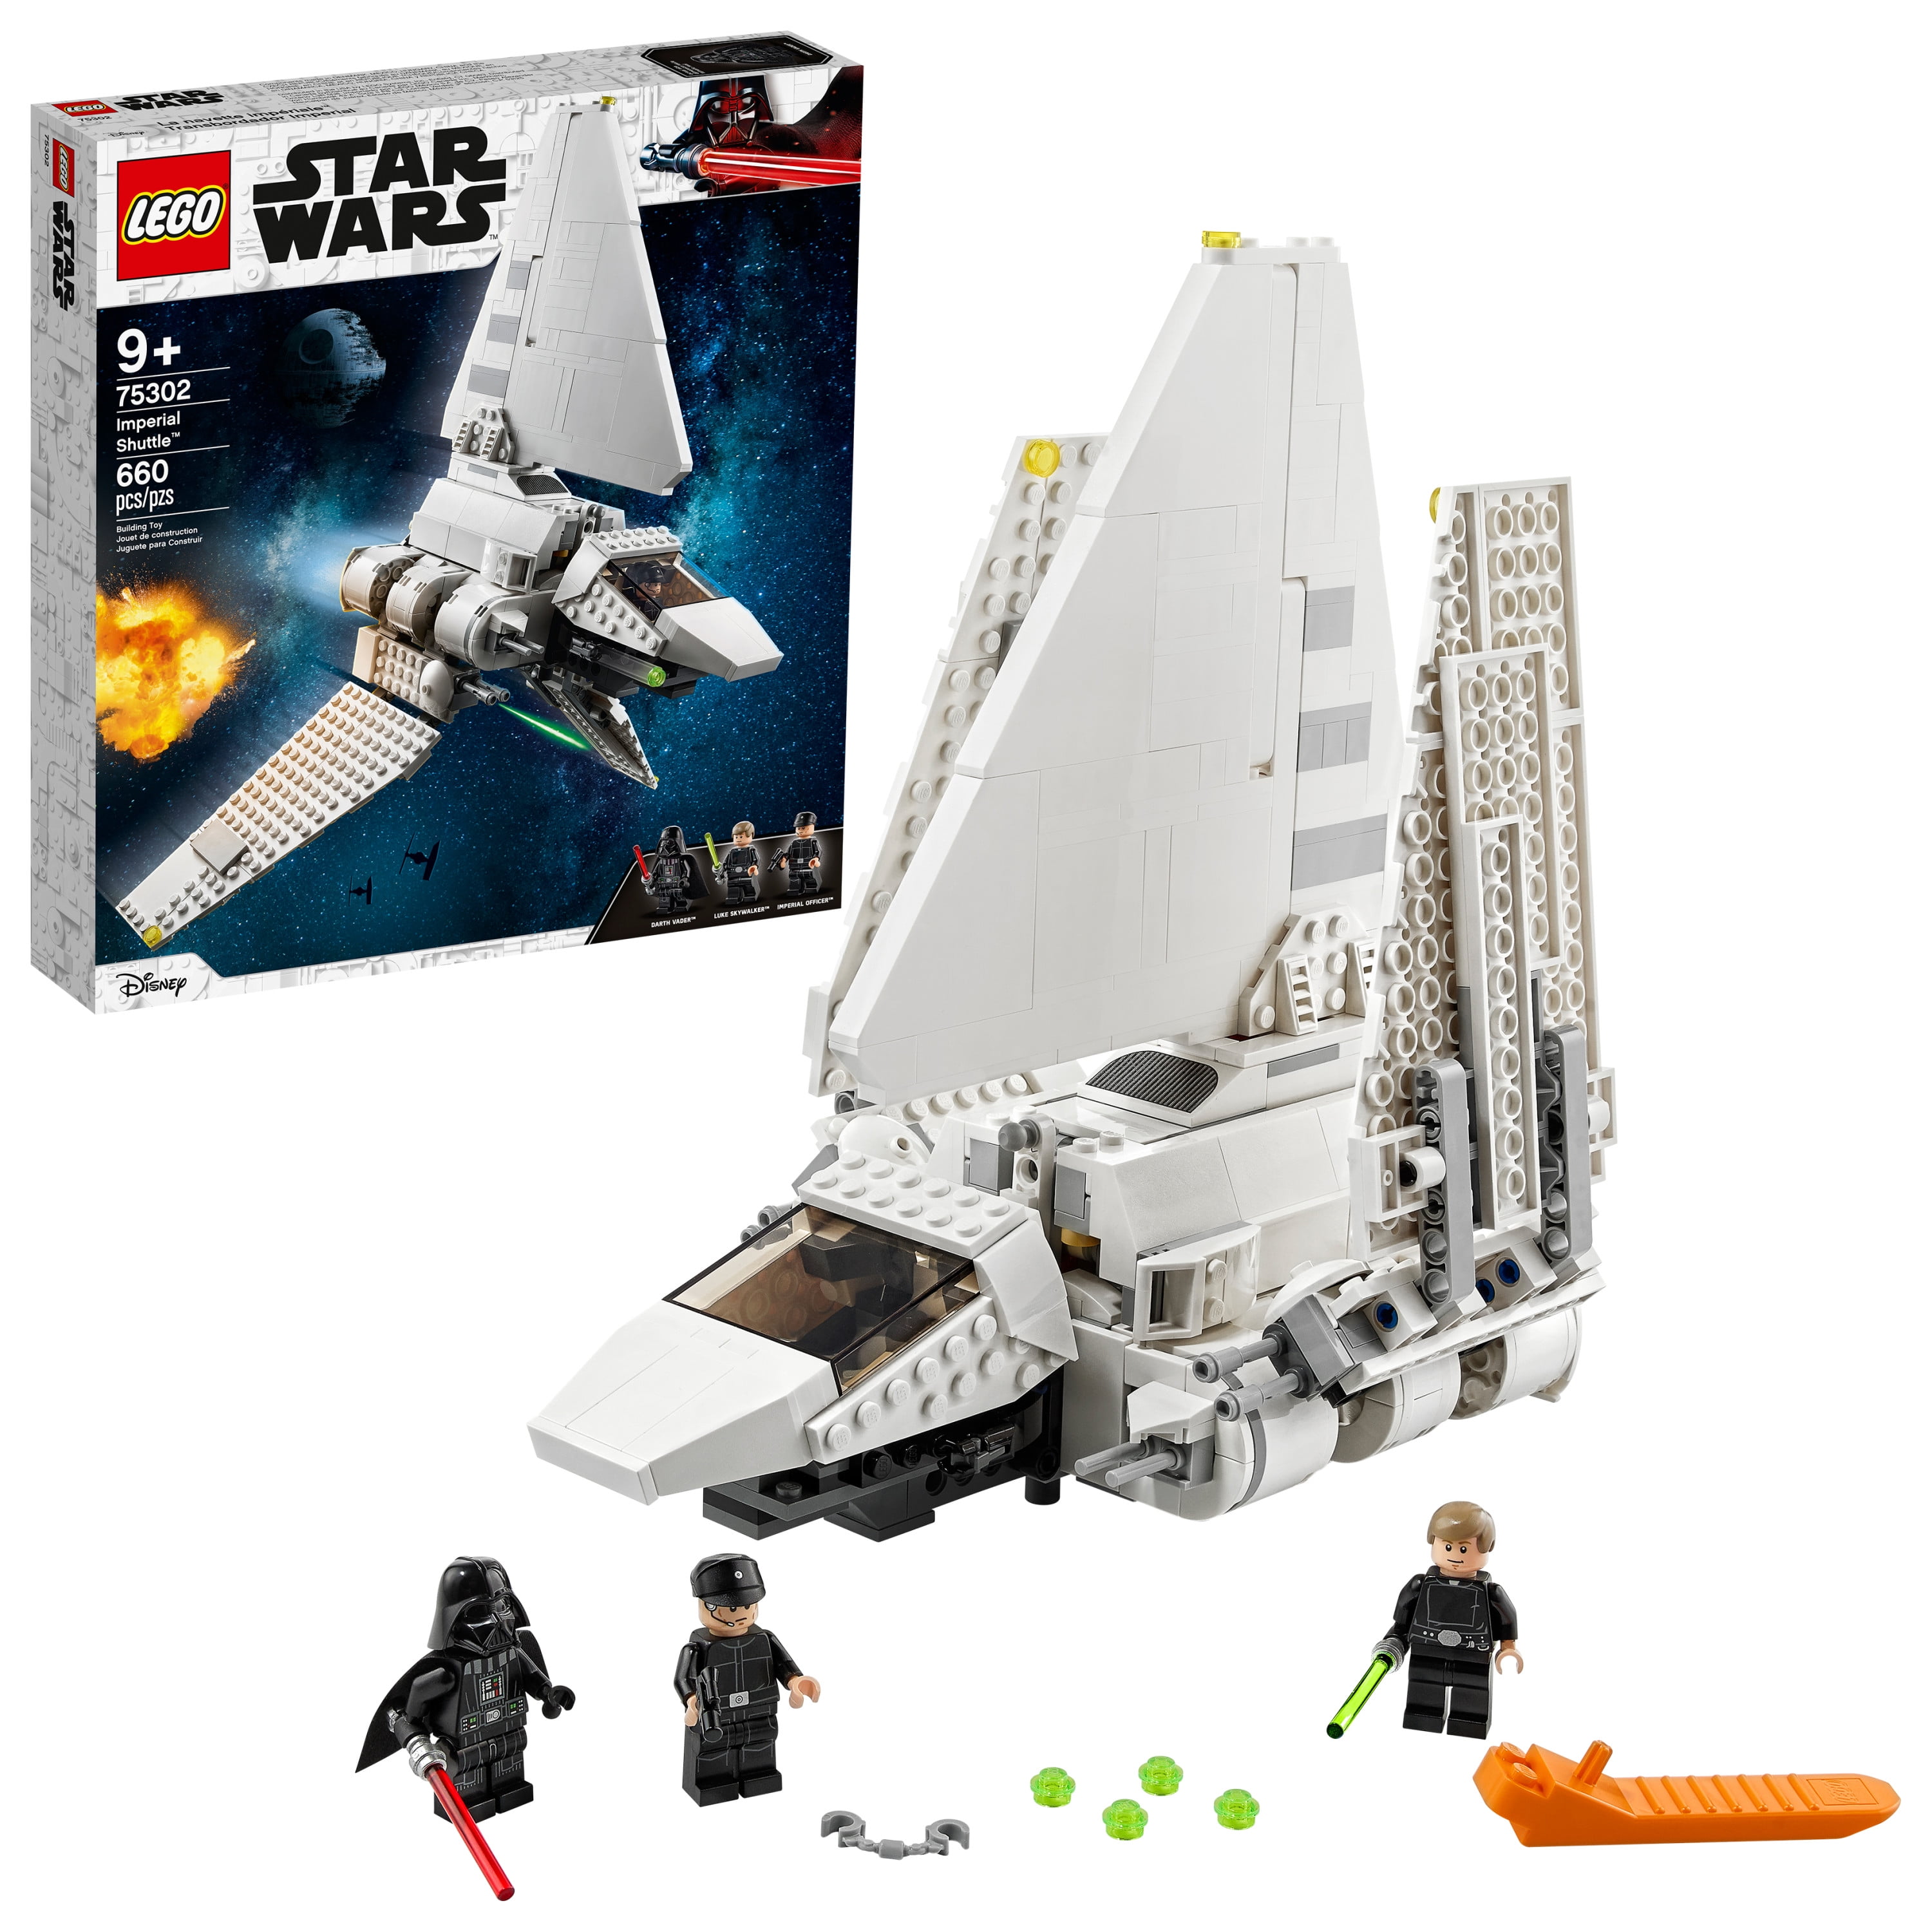 Star Imperial 75302 Building Toy (660 Pieces) - Walmart. com